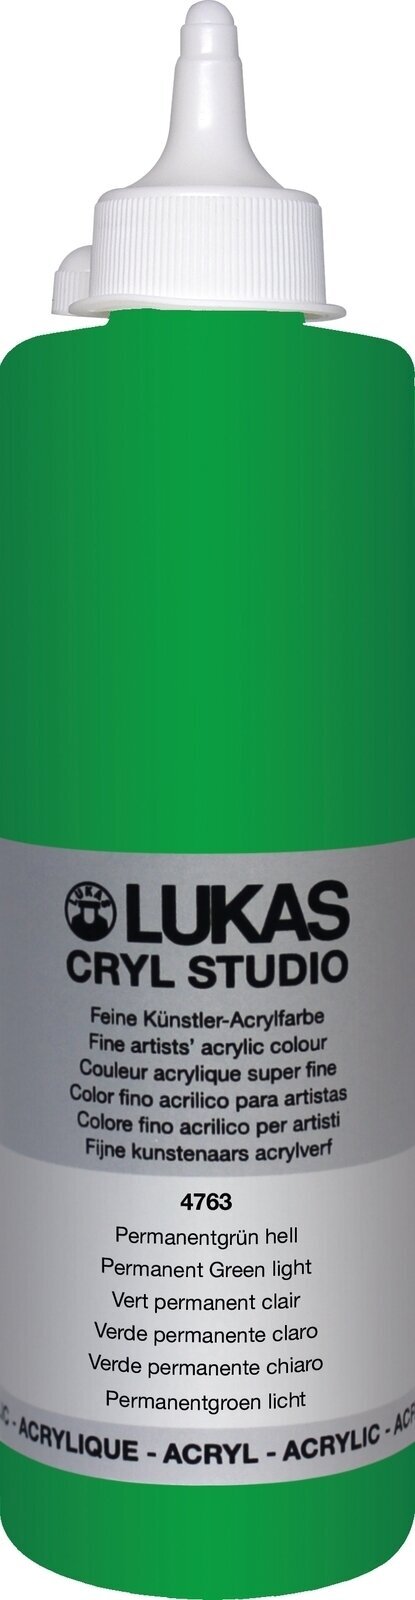 Acrylic Paint Lukas Cryl Studio Acrylic Paint 500 ml Permanent Green Light